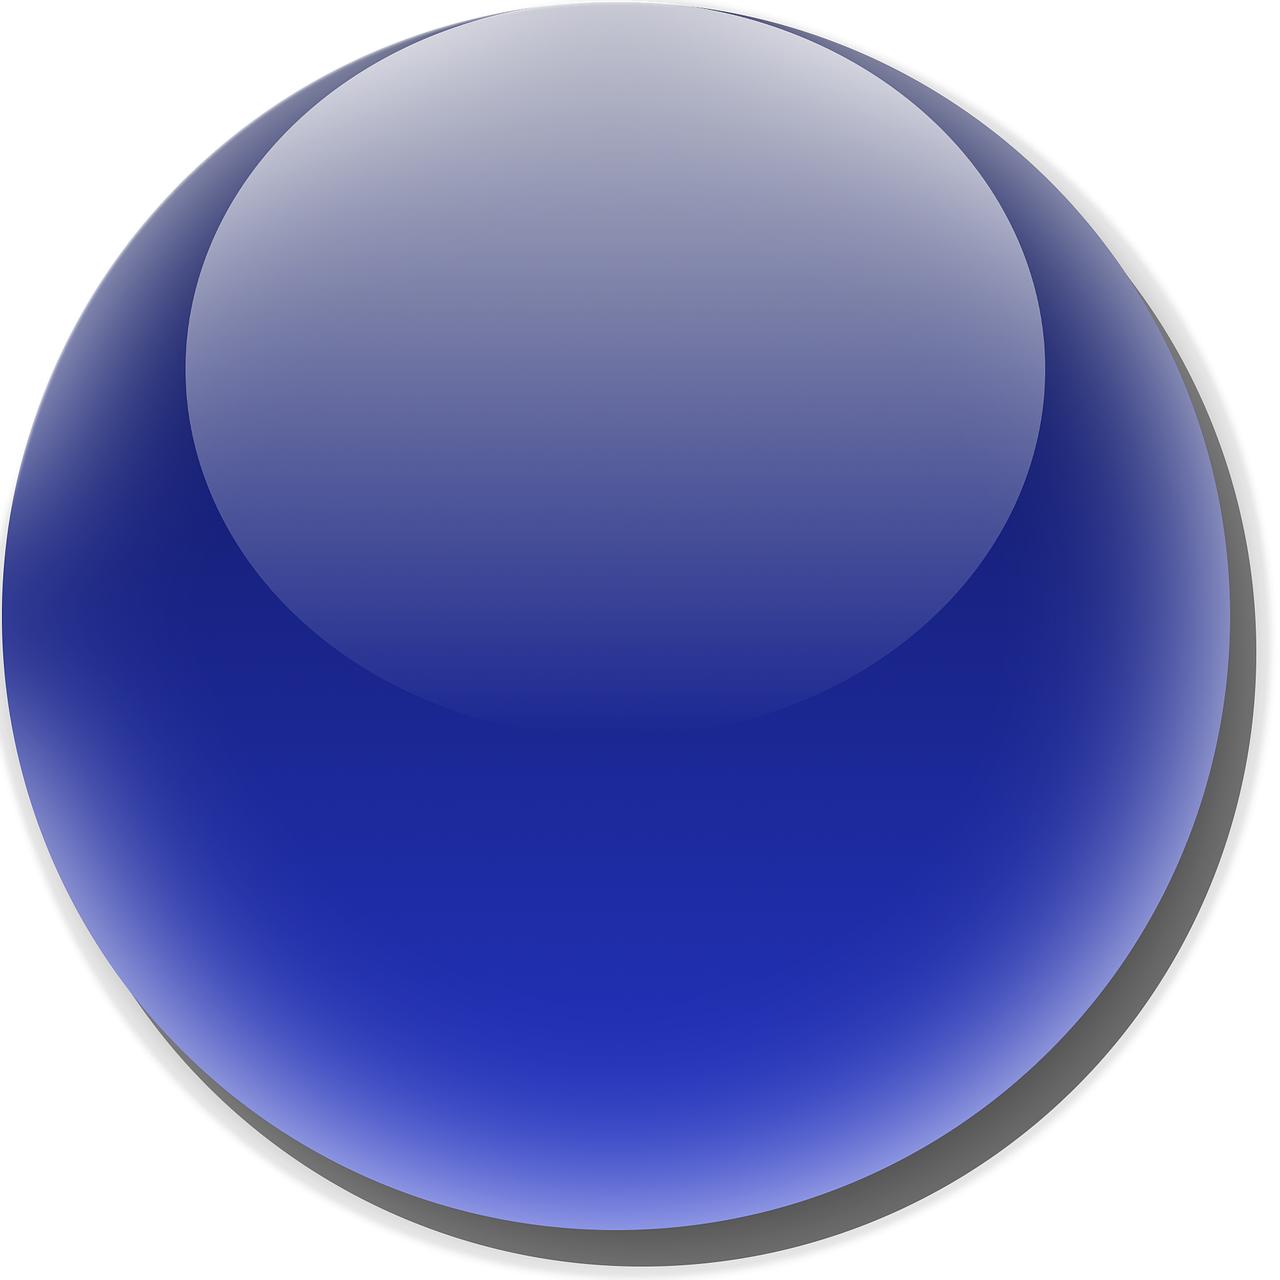 sphere the celestial sphere blue free photo